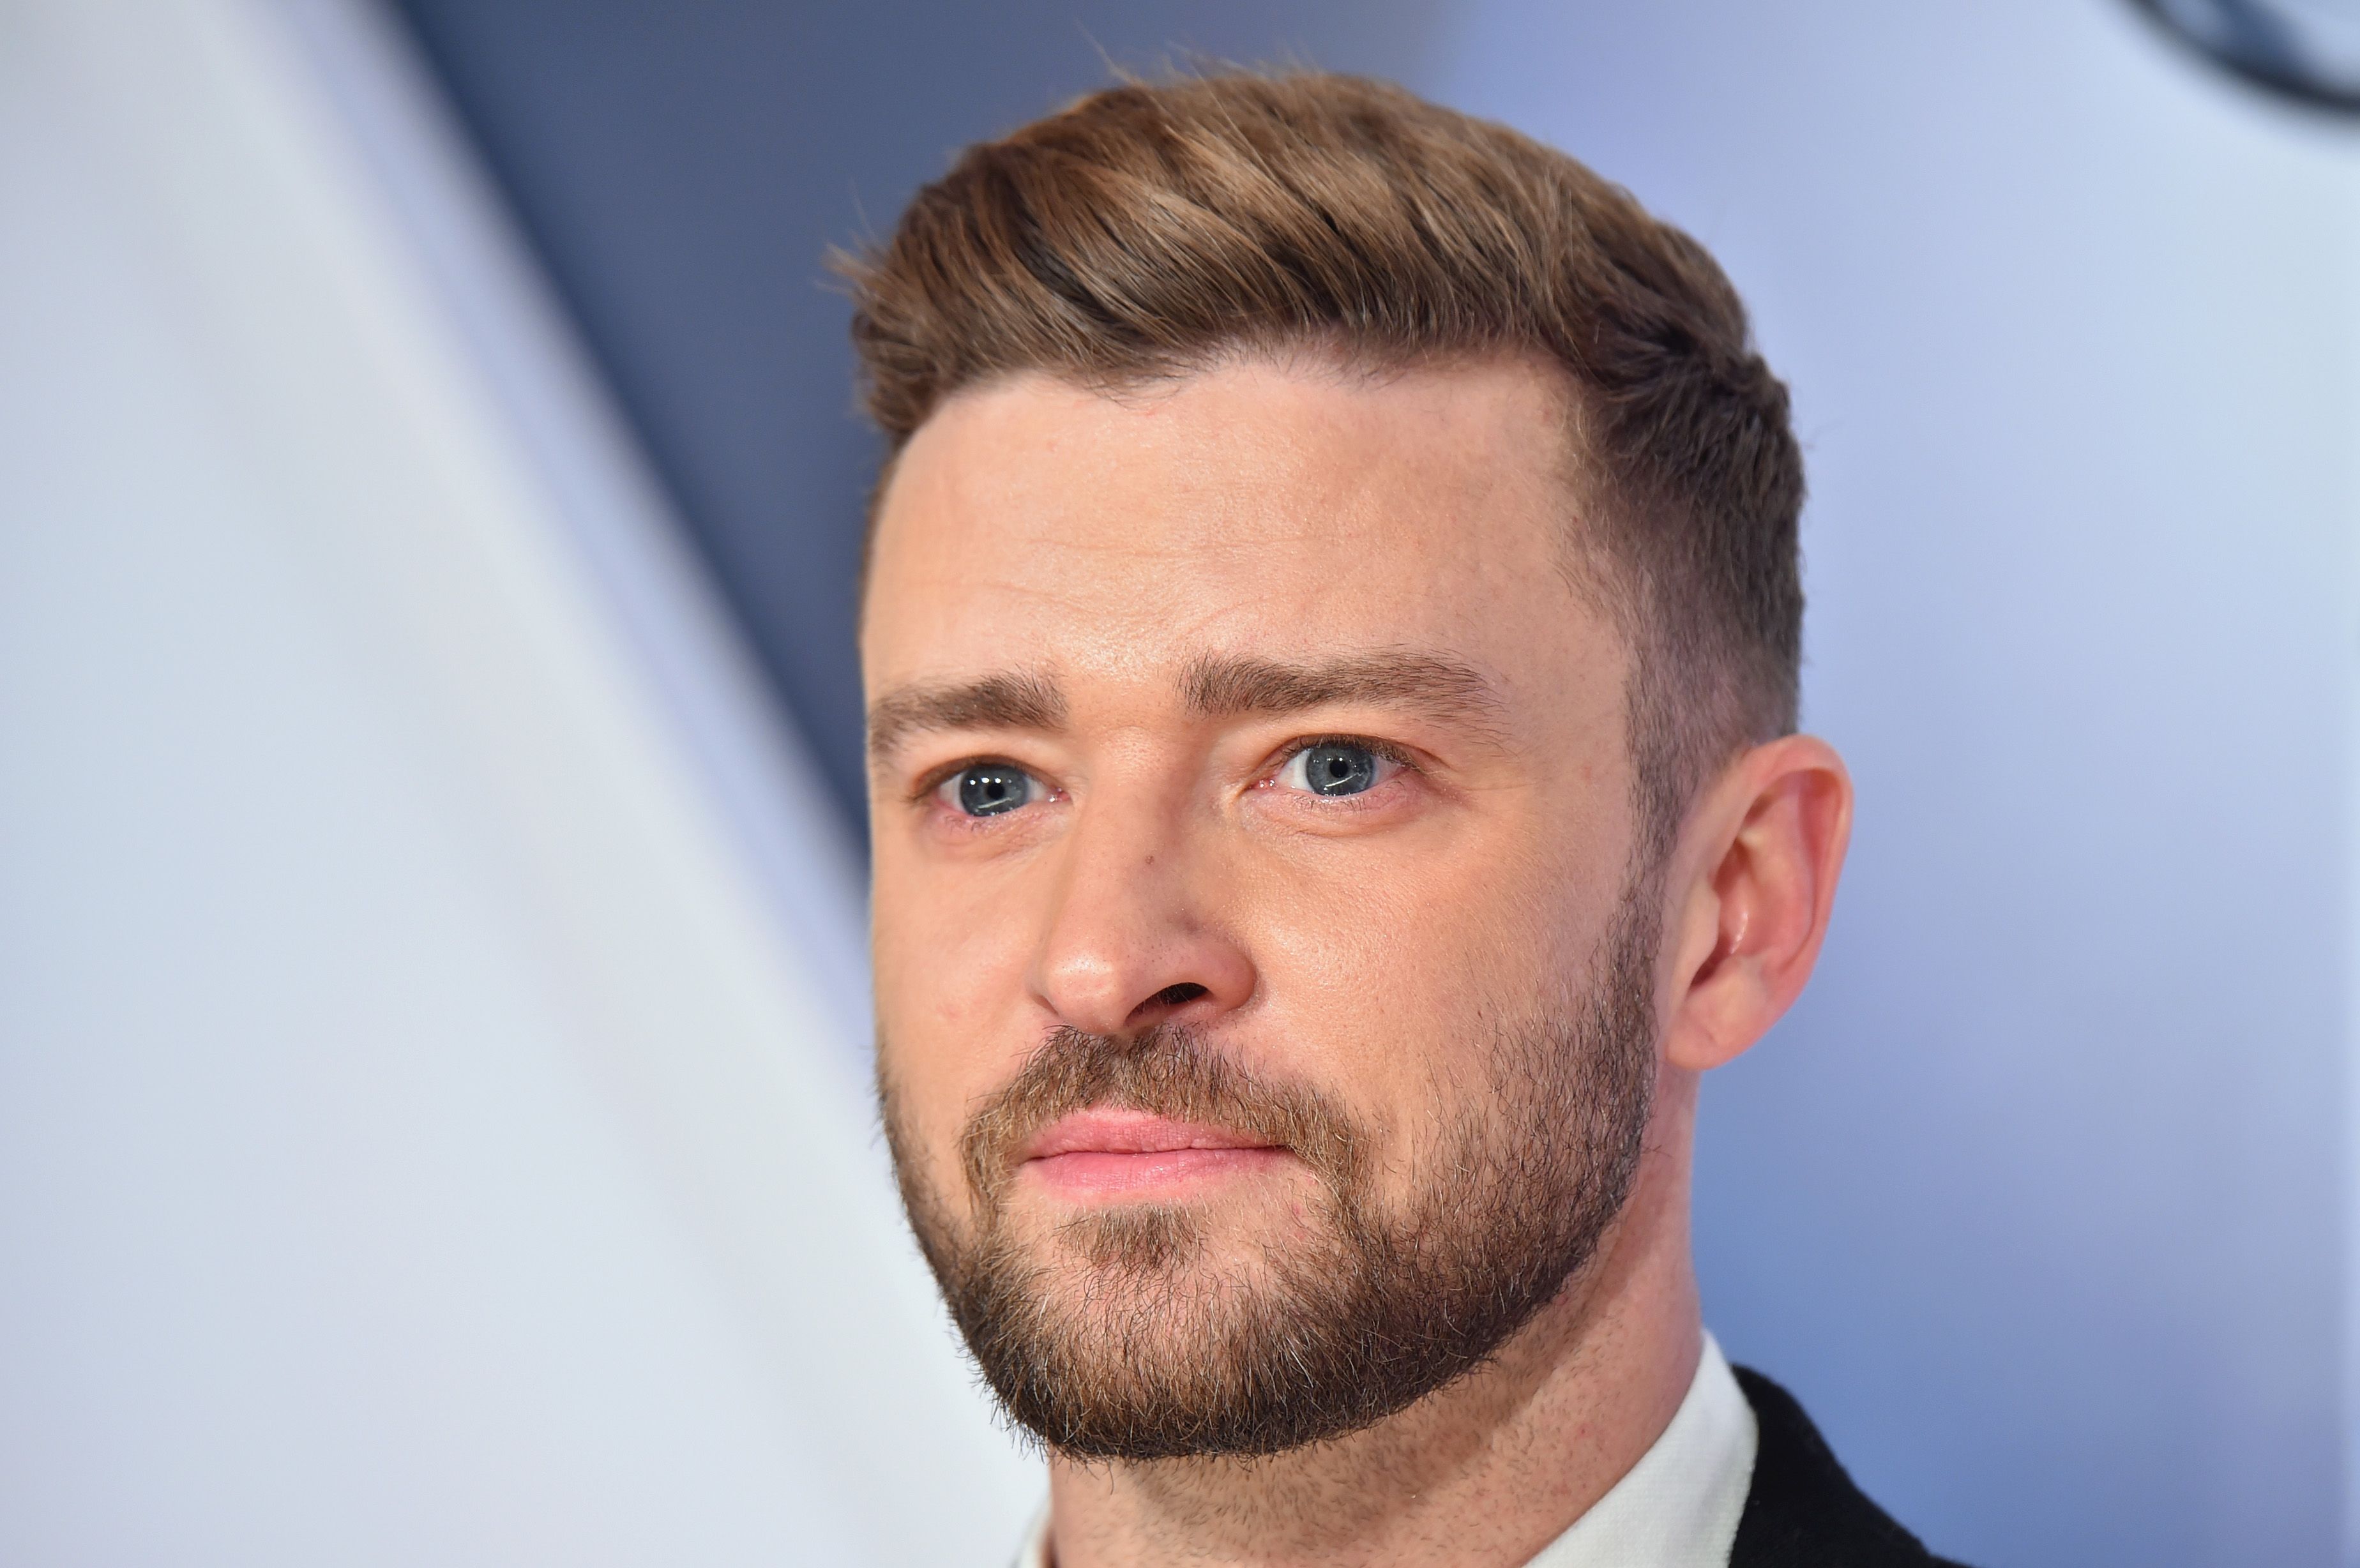 Justin Timberlake taking full advantage of his 'Experience